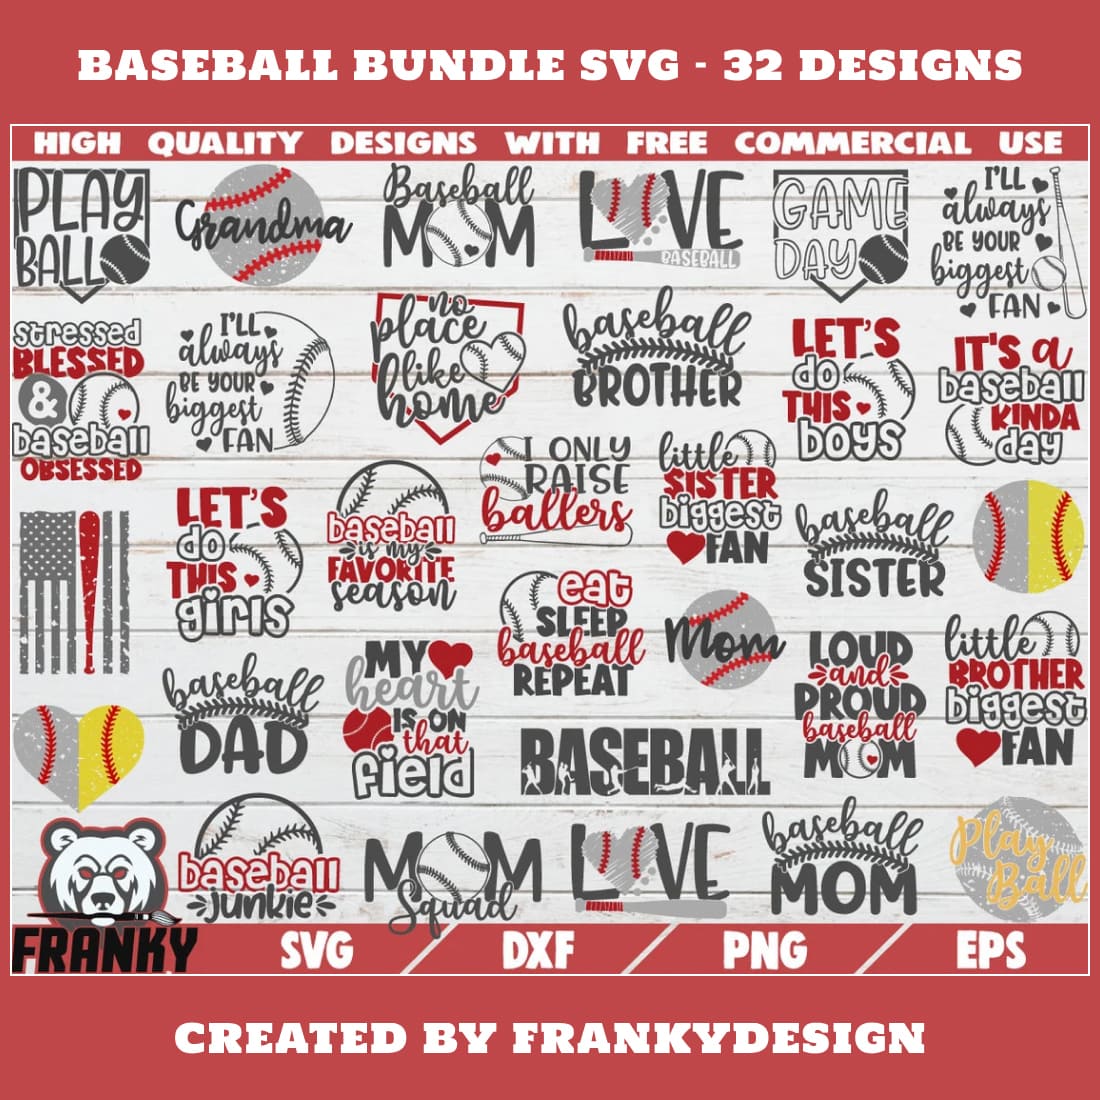 Baseball bundle SVG - 32 Designs.